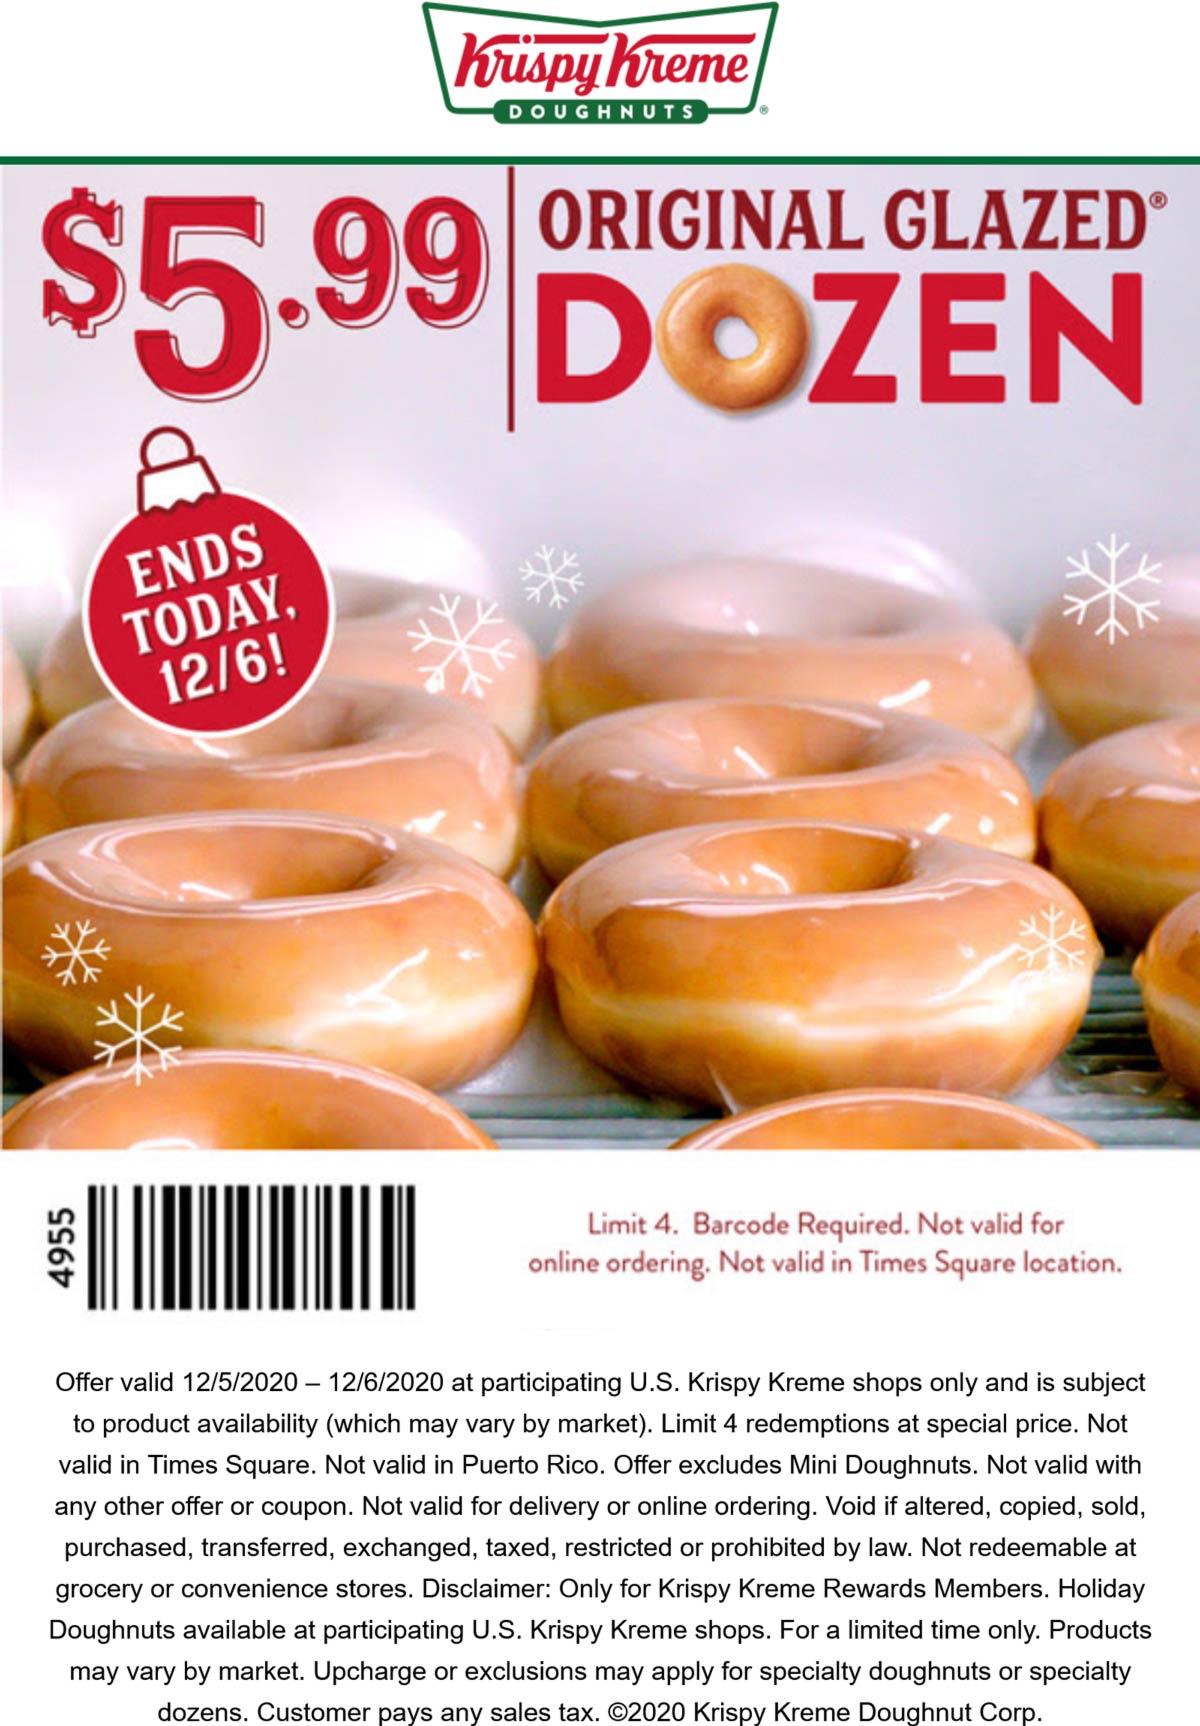 6 glazed dozens today at Krispy Kreme doughnuts krispykreme The